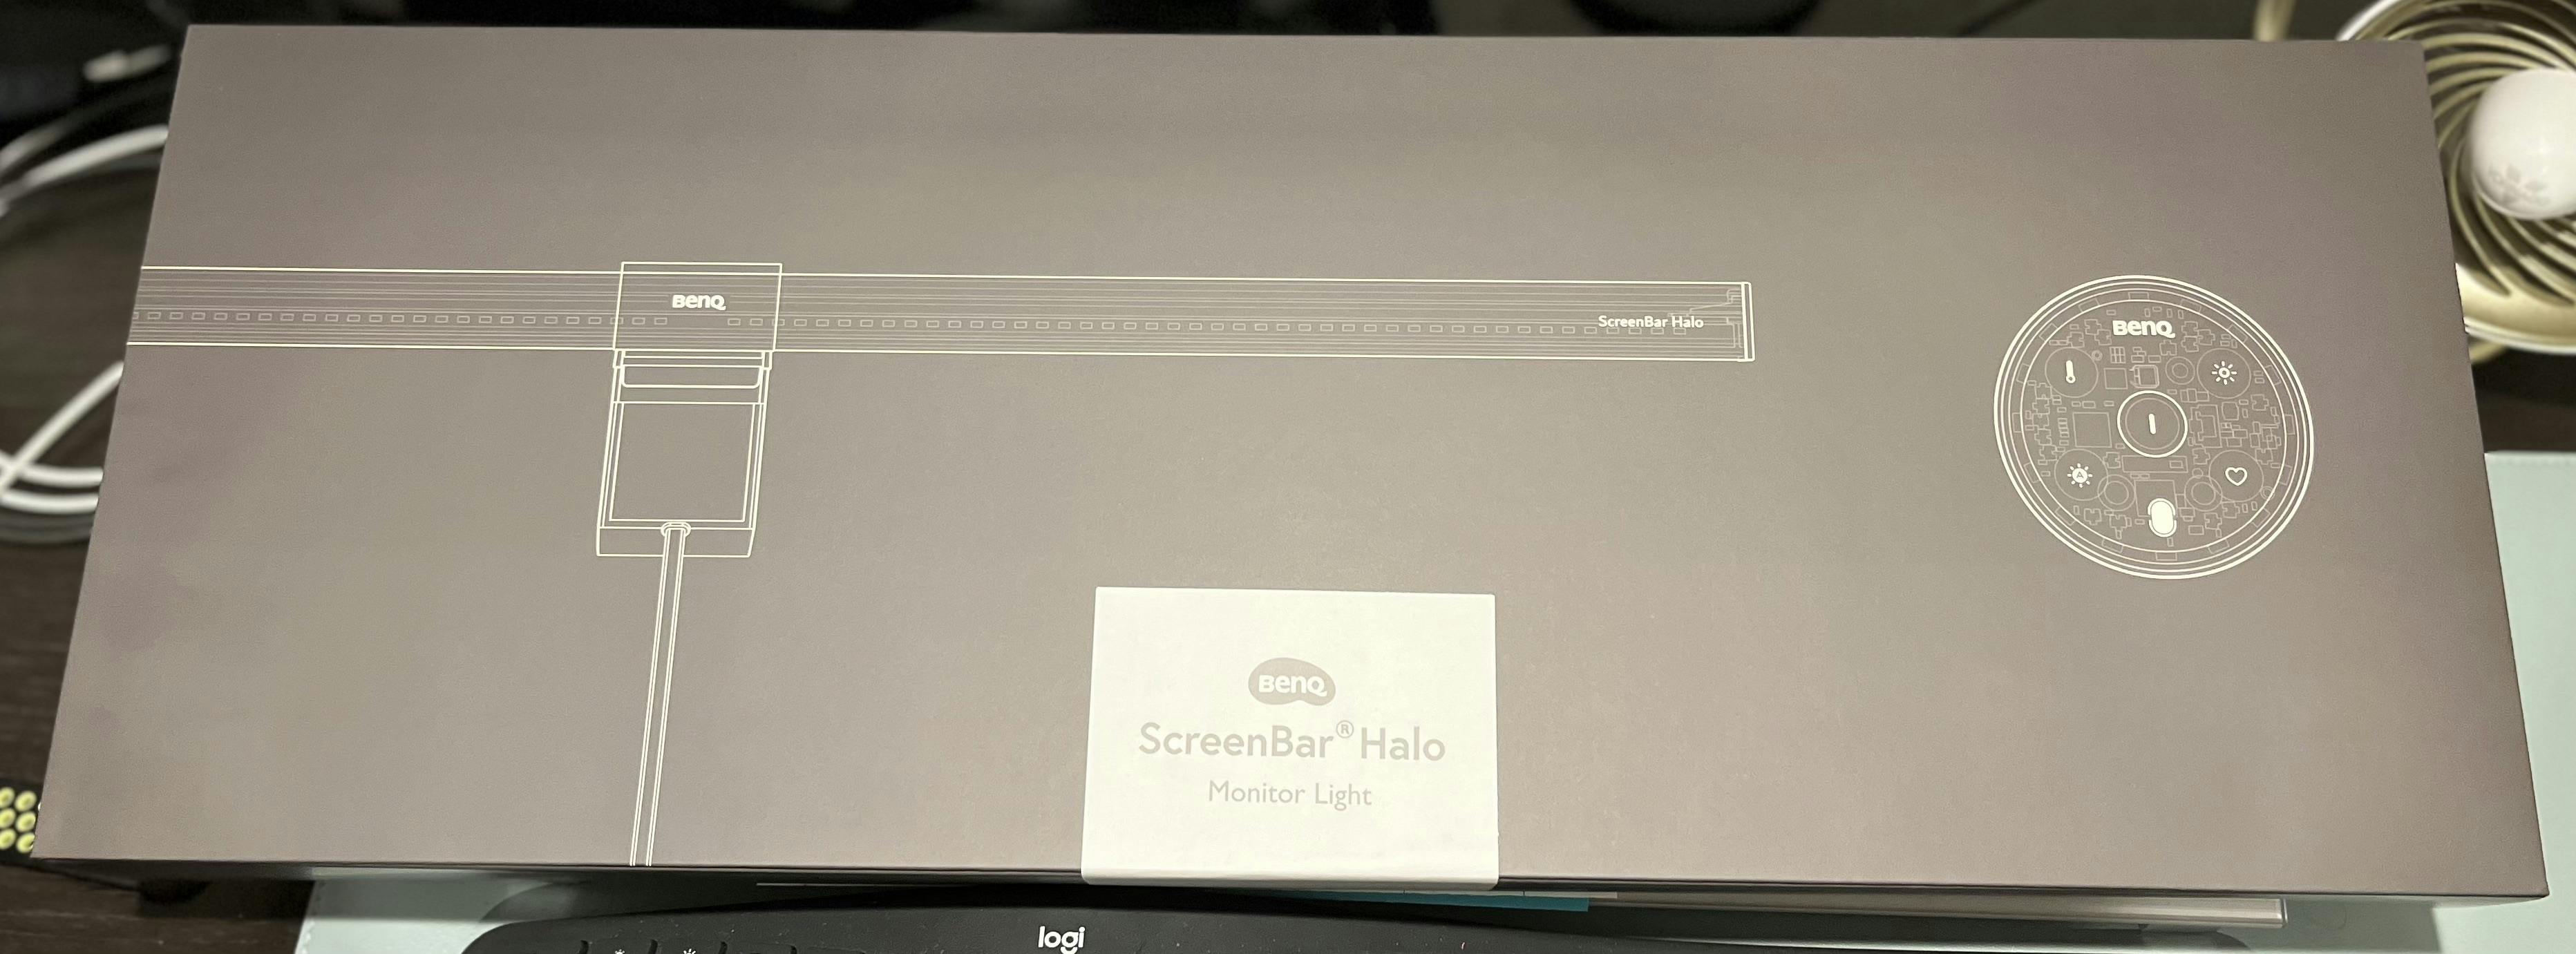 BenQ ScreenBar Halo Monitor Light in the box it shipped in